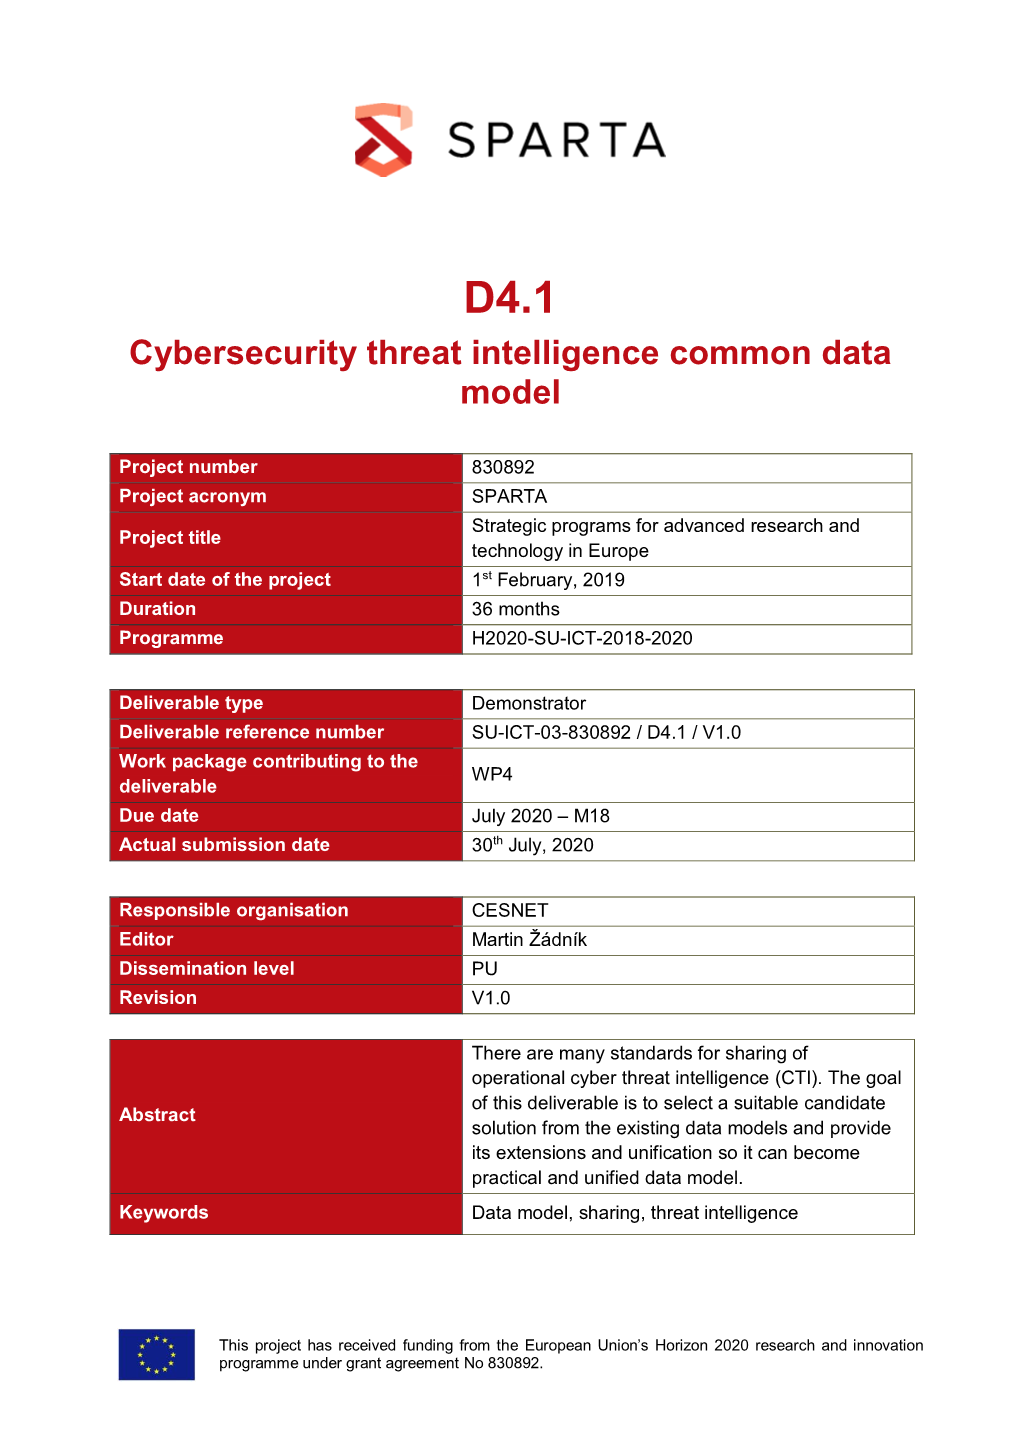 Cybersecurity Threat Intelligence Common Data Model